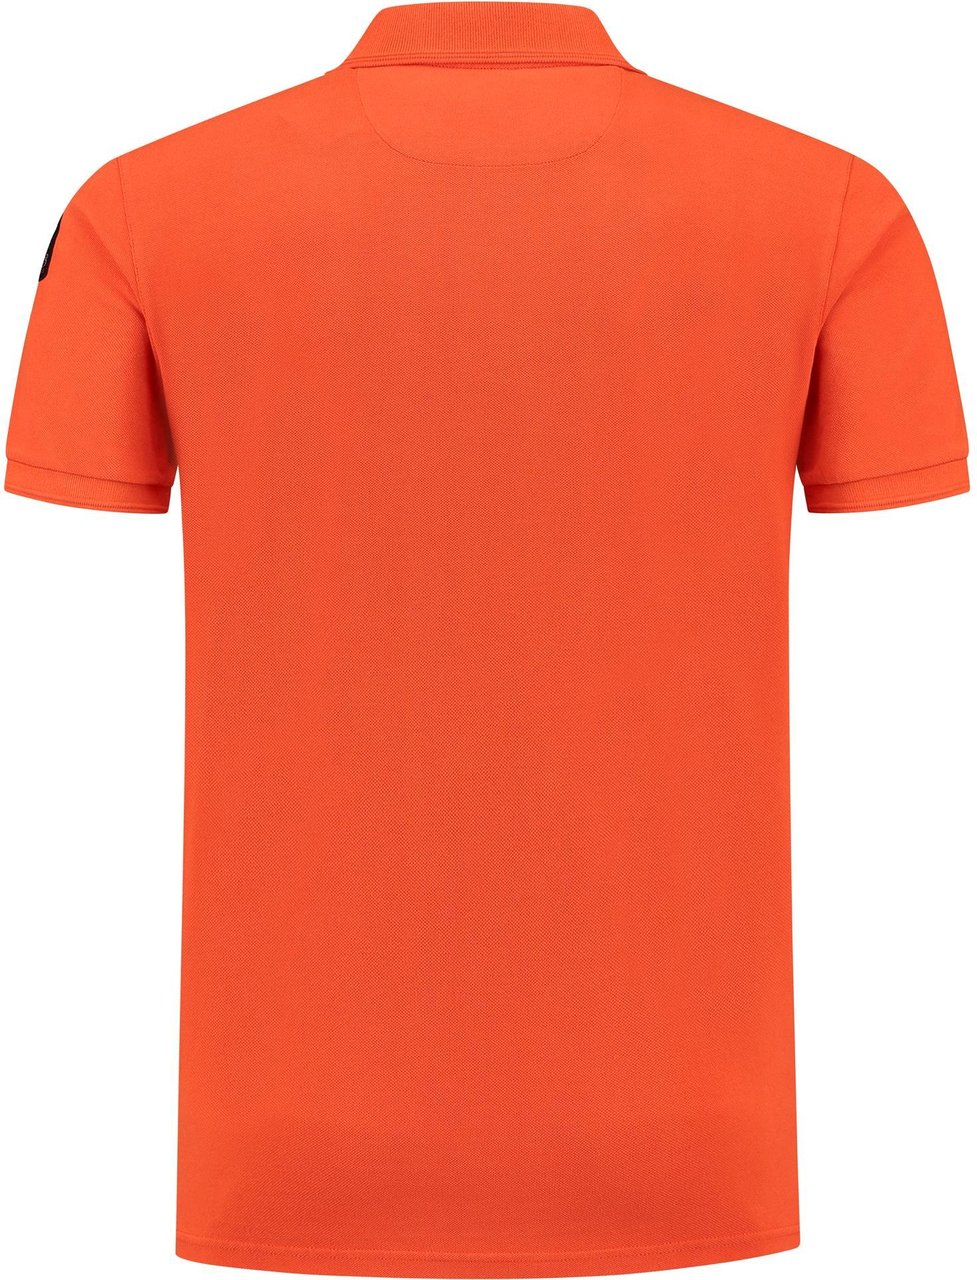 Parajumpers Basic Polo - Man Oranje